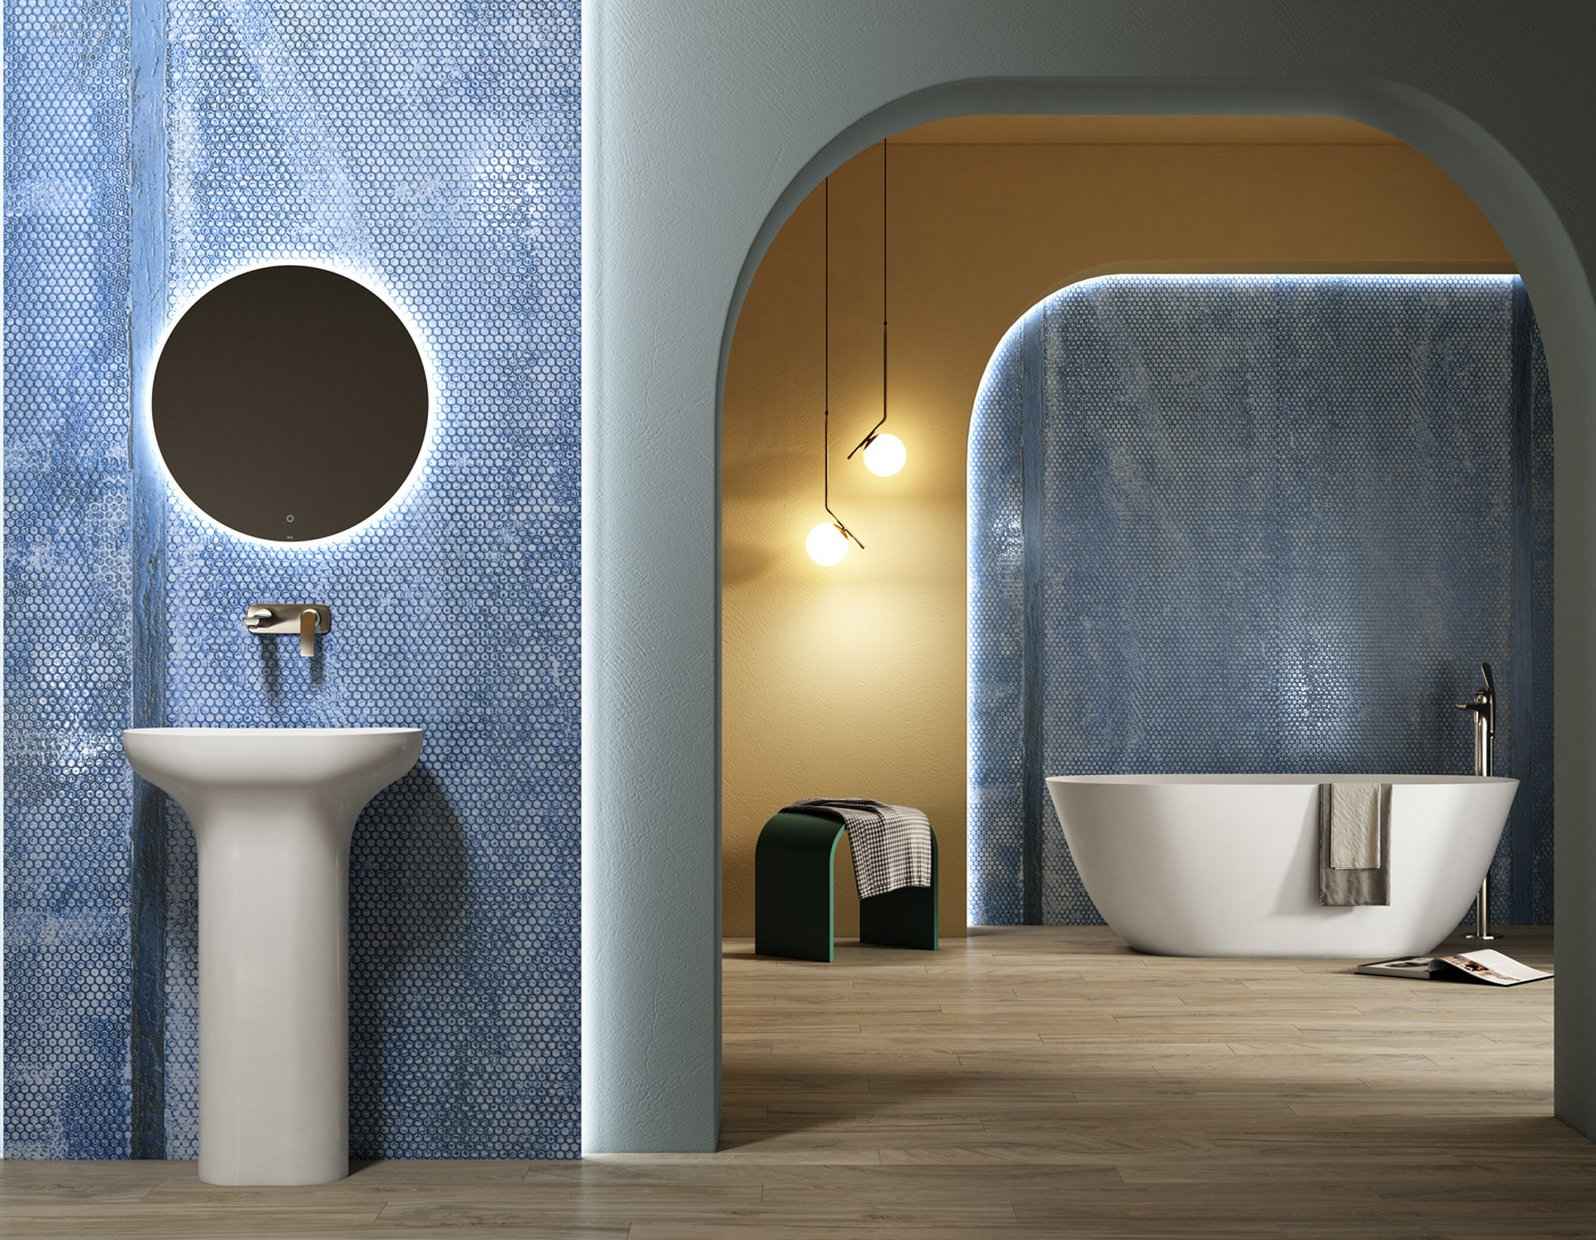 14 Black Tile Bathroom Ideas to Add a WOW Factor